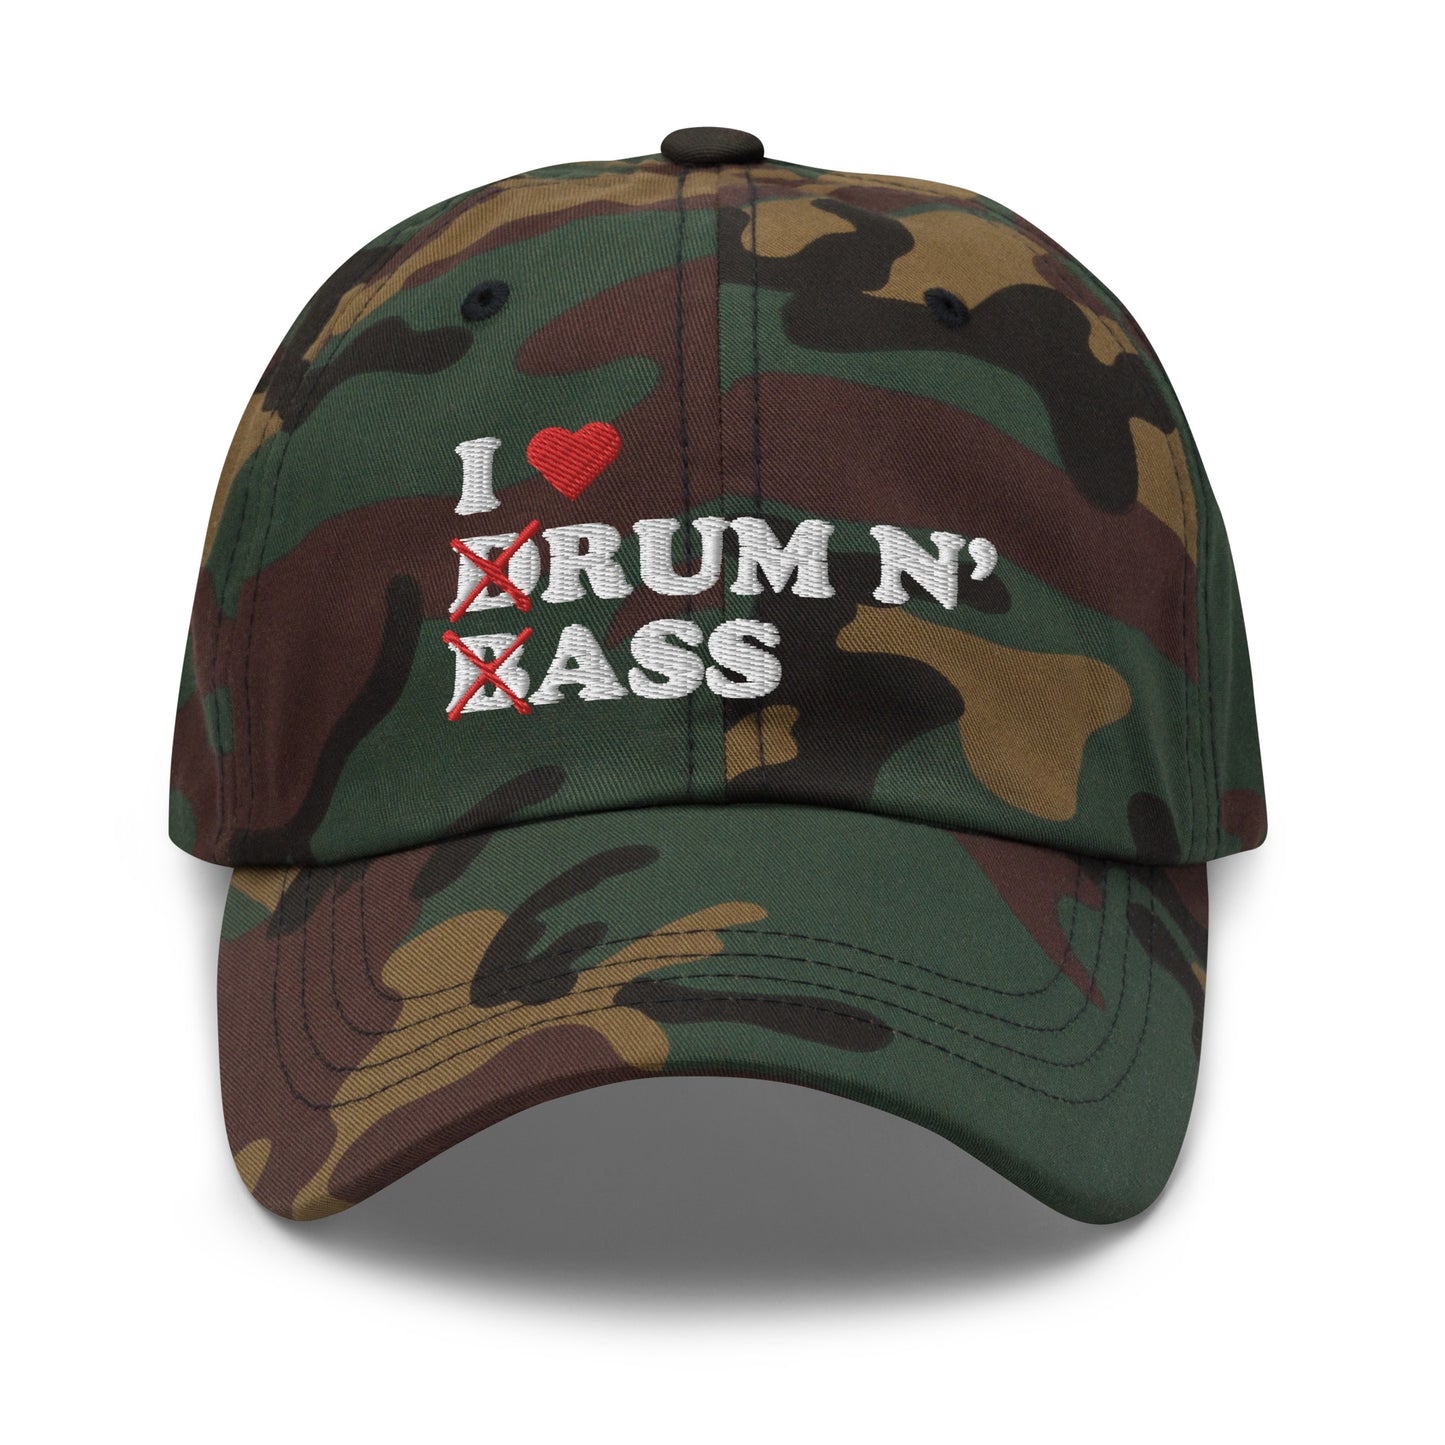 I Heart Drum & Bass hat